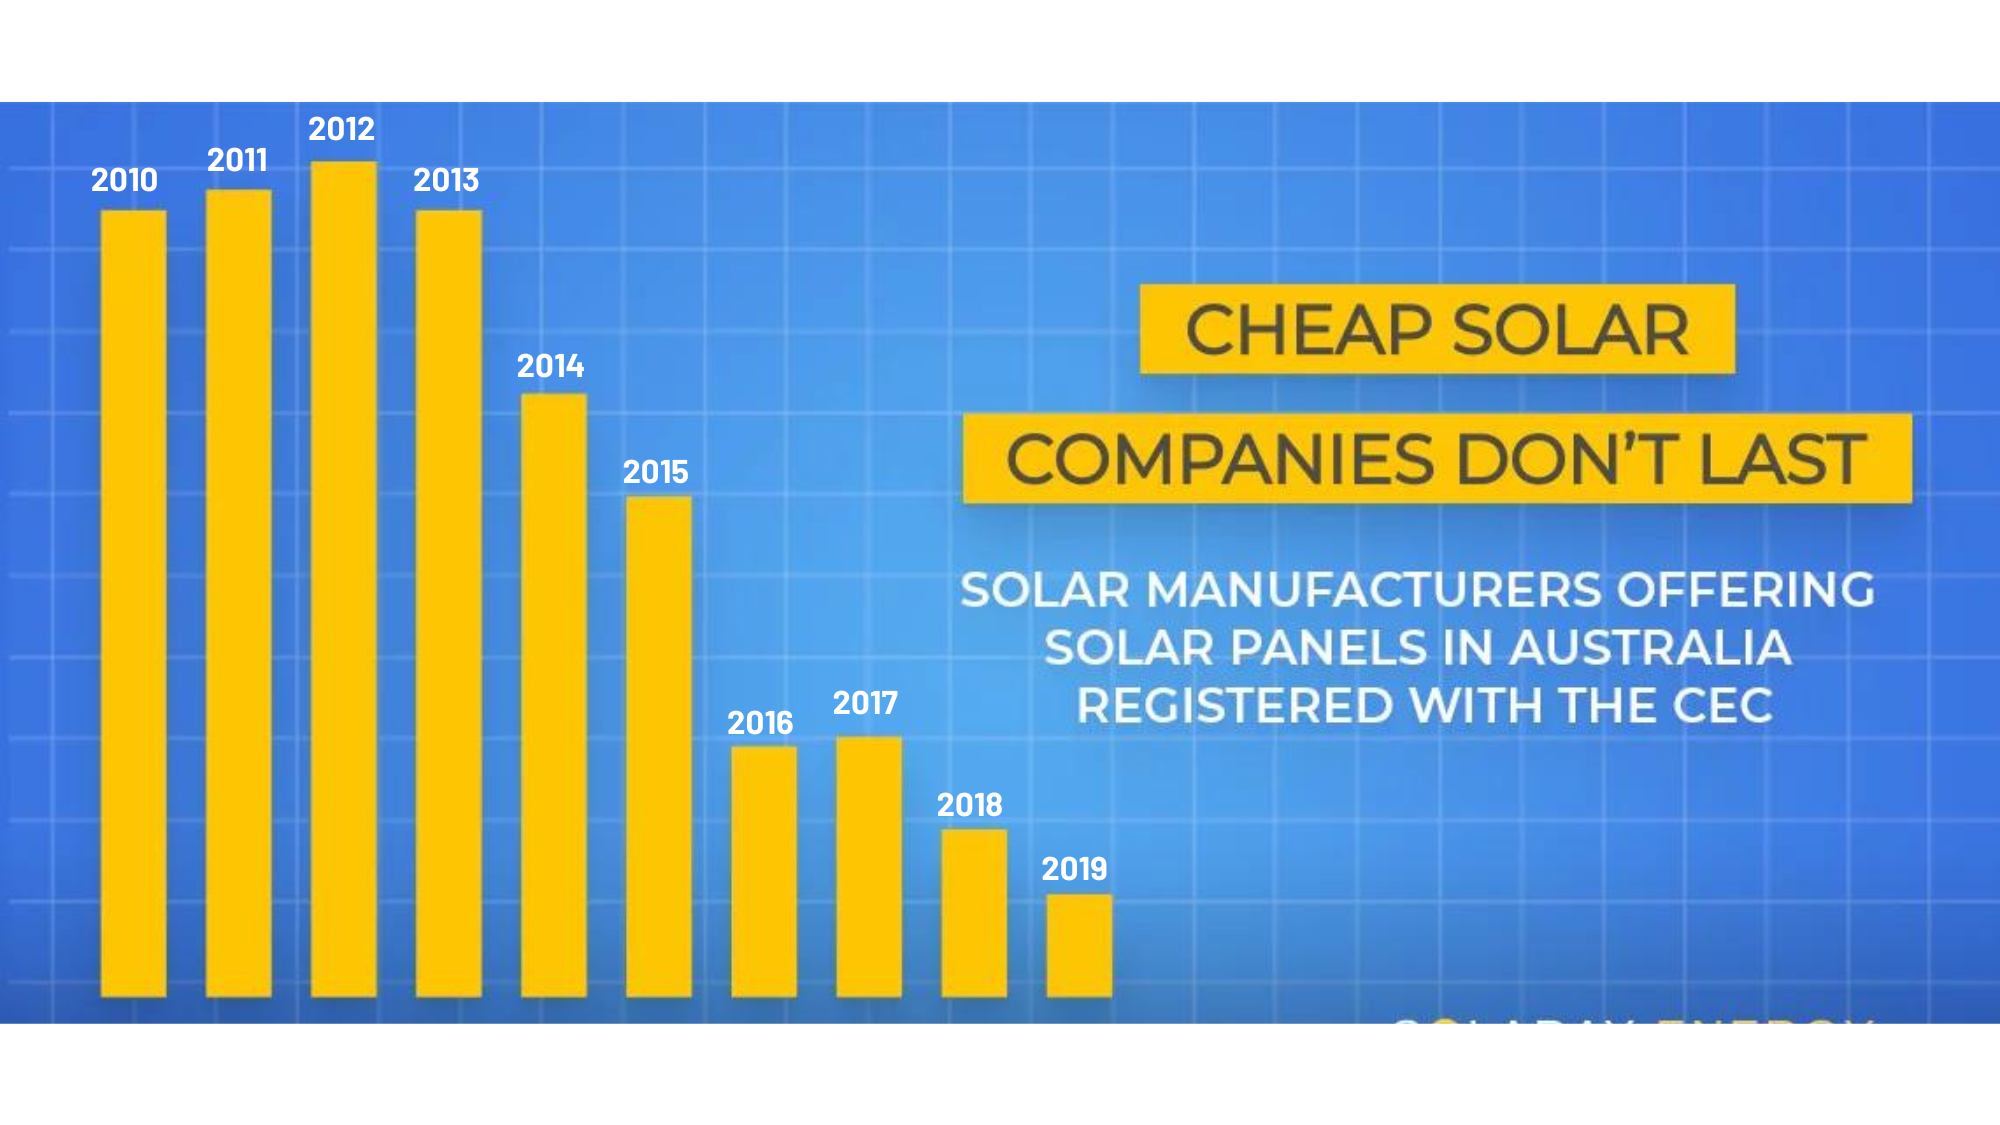 Cheap Solar Companies Don't Last